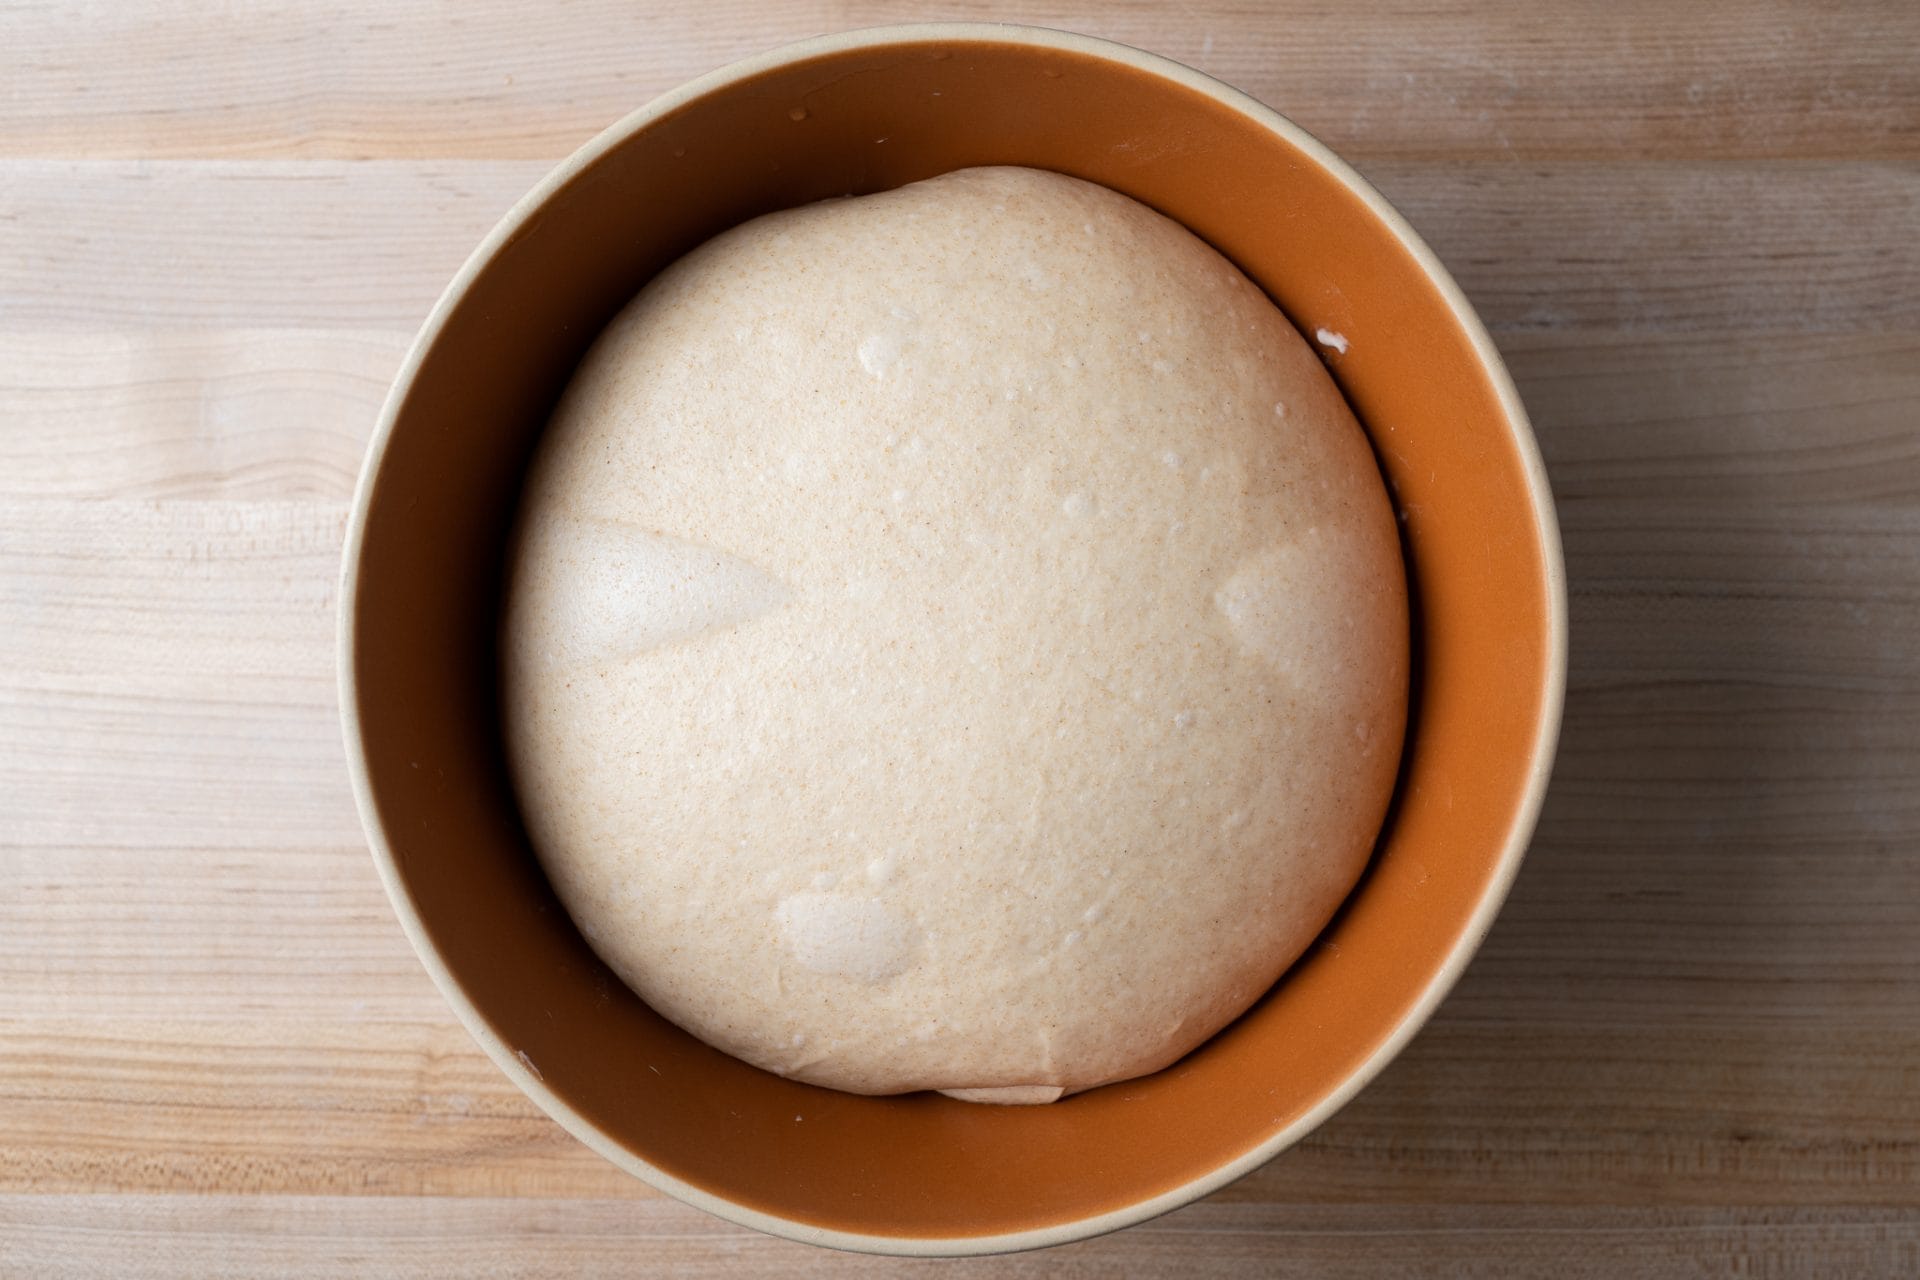 Hot dog bun dough after chilling